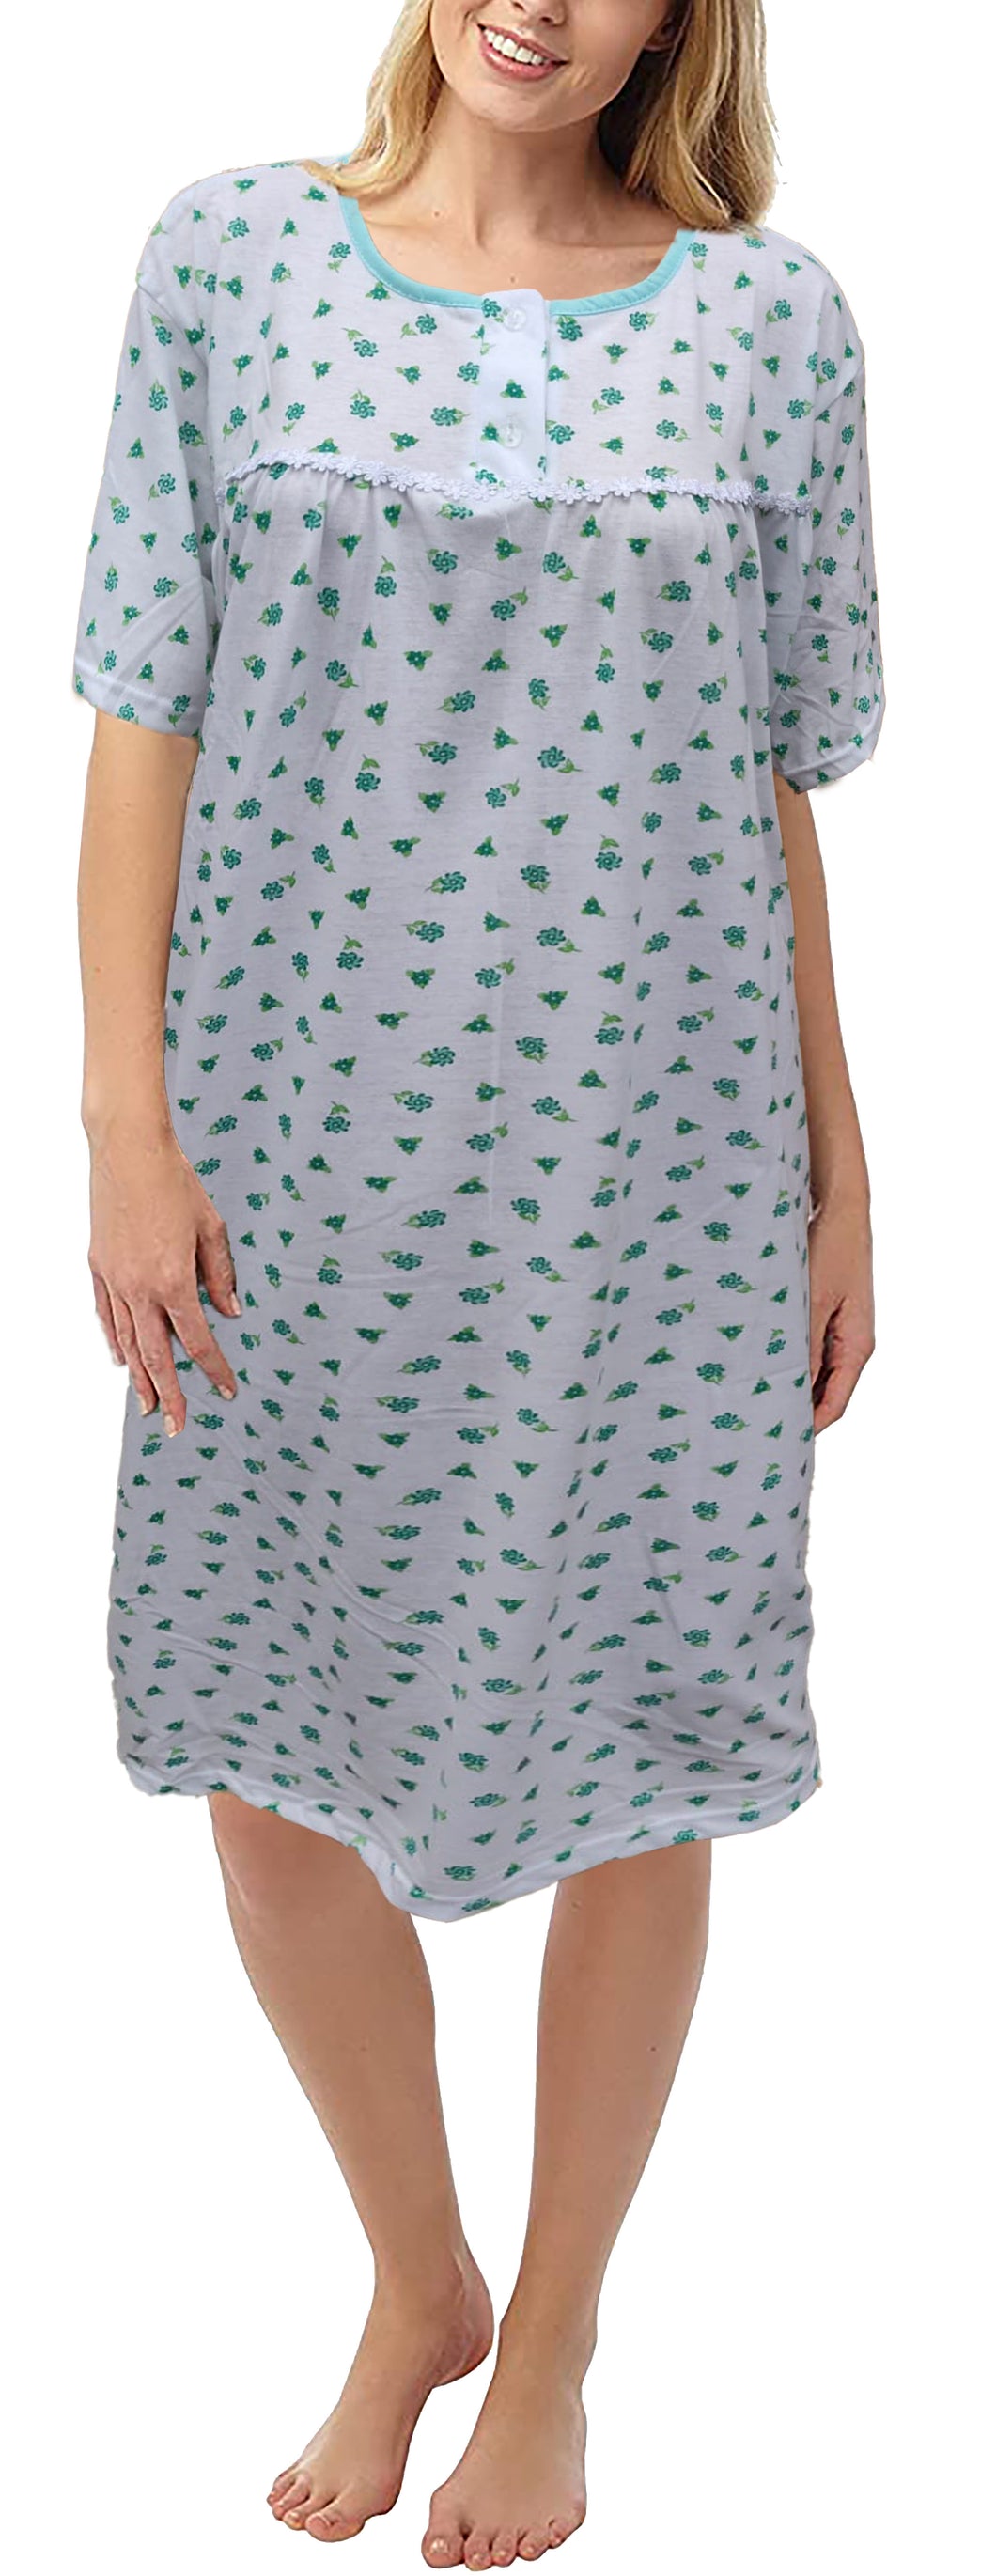 Women's Nightdress Short Sleeve Nightshirt 100% Cotton Nightwear Plus Size Ladies Pajamas Flowers Print